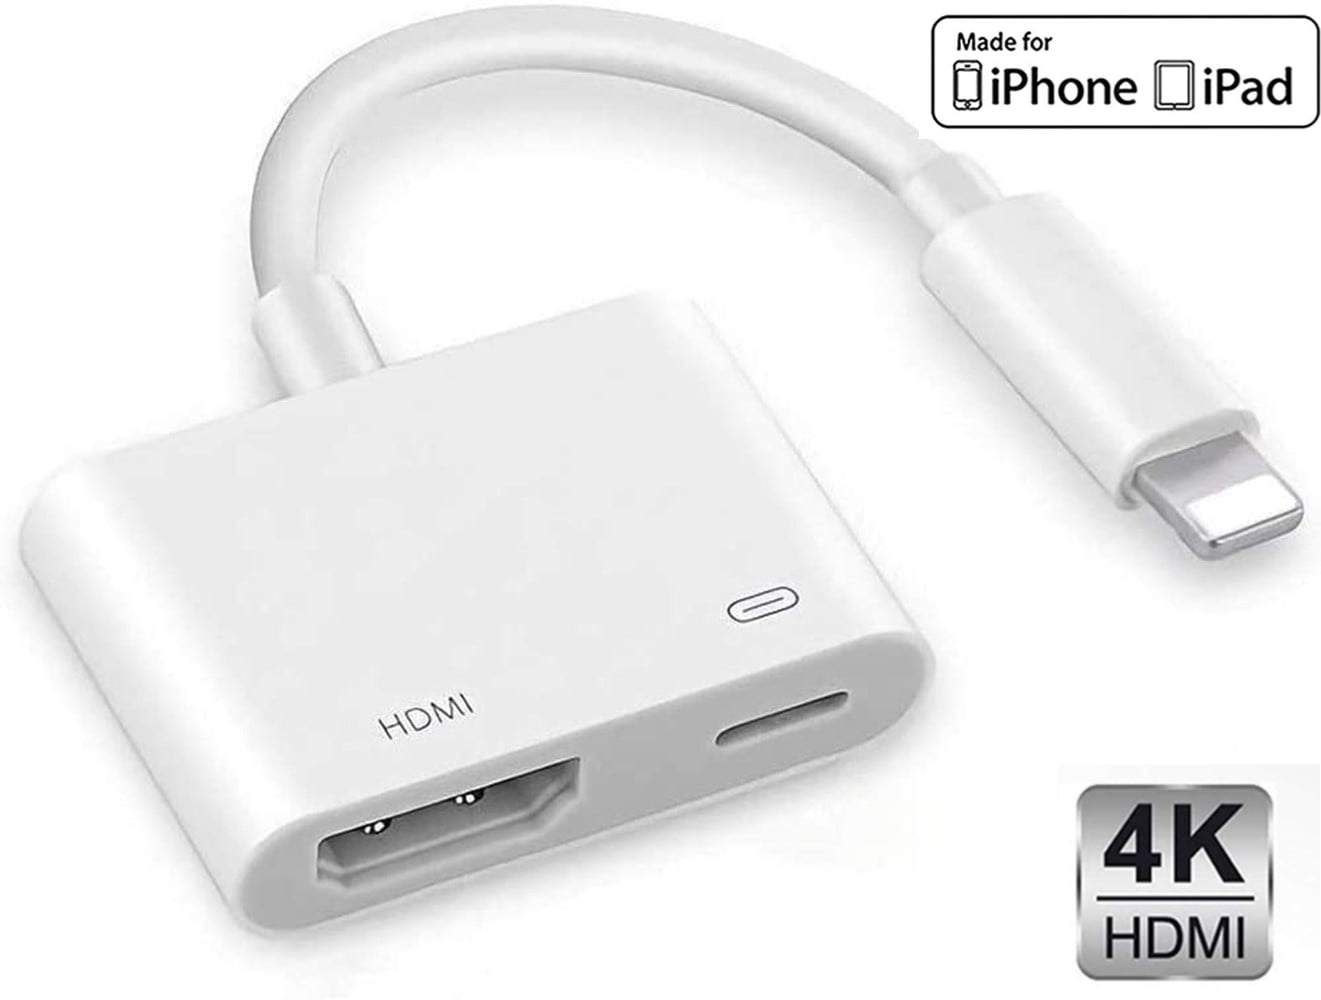 iPod,on HDTV/Projector/Monitor Plug and play Charging Port）Compatible for iPhone iPad Apple Lightning to Digital AV Adapter（1080P HDMI Sync Screen Digital Audio AV Converter Apple MFi Certified 